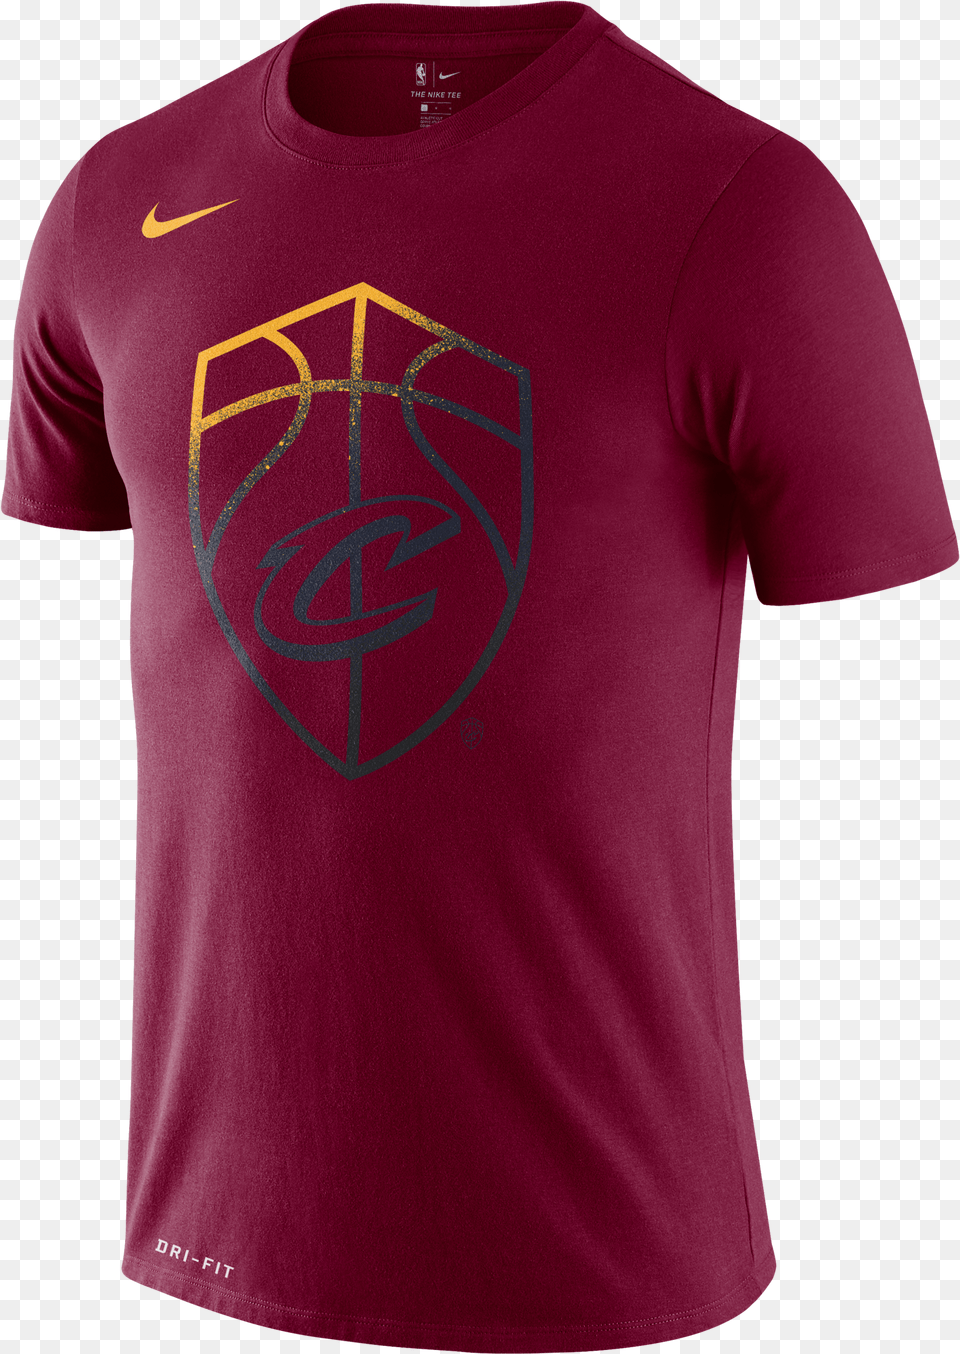 Nike Nba Cleveland Cavaliers Logo Dry Nike Ole Miss Baseball T Shirt, Clothing, T-shirt Png Image